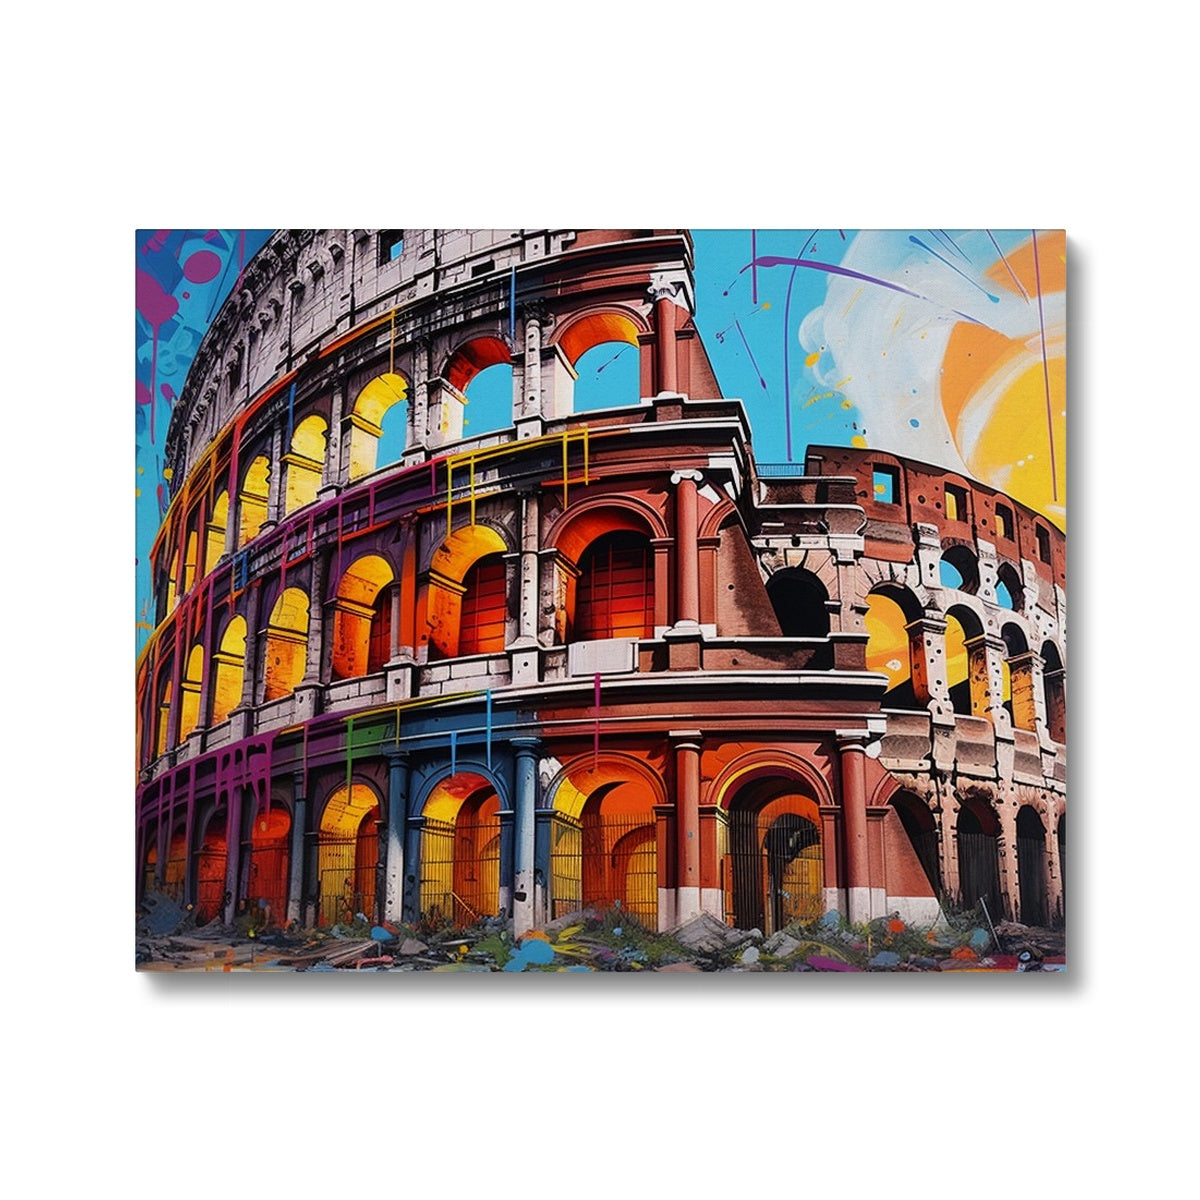 Colosseum, Rome  Canvas